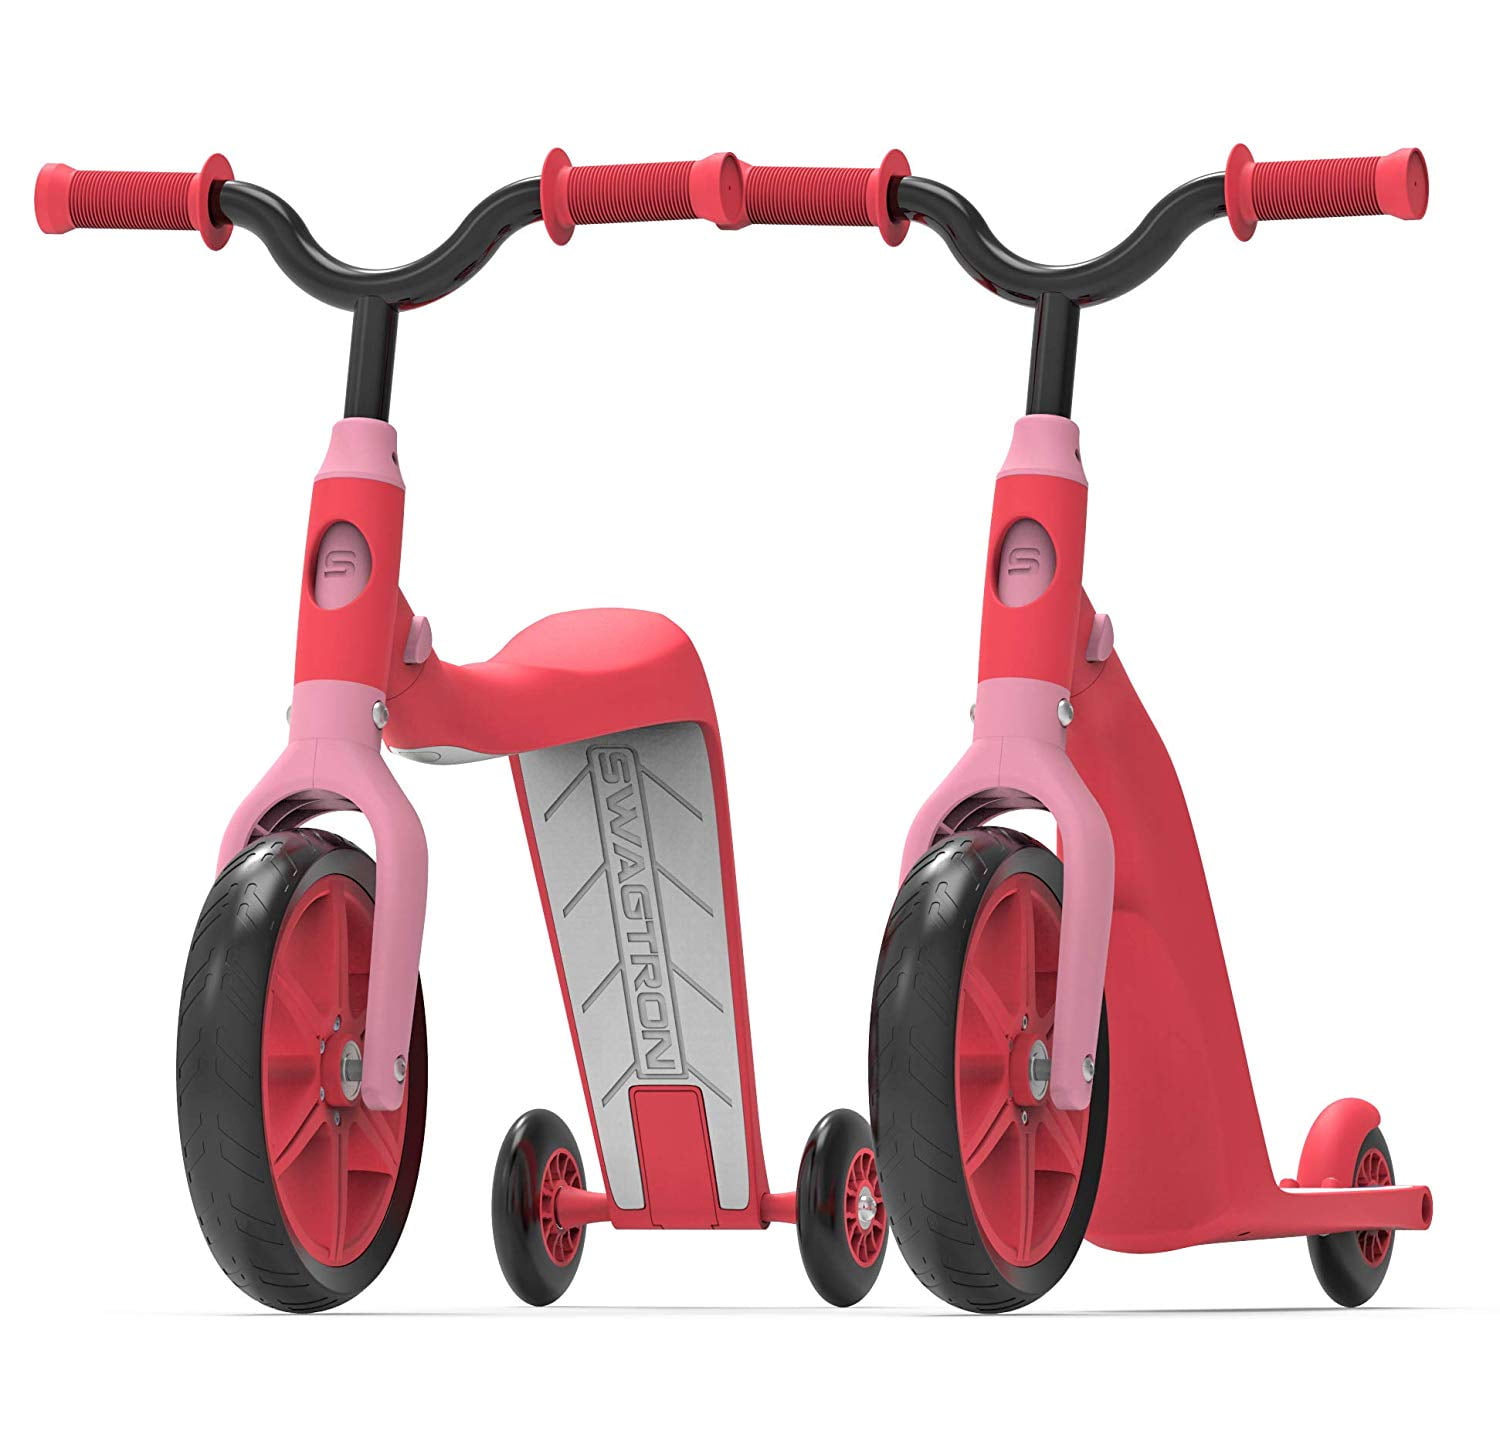 udvikle Investere Jane Austen Swagtron K6 Convertible 4-in-1 Toddler Scooter & Balance Bike, Red -  Walmart.com